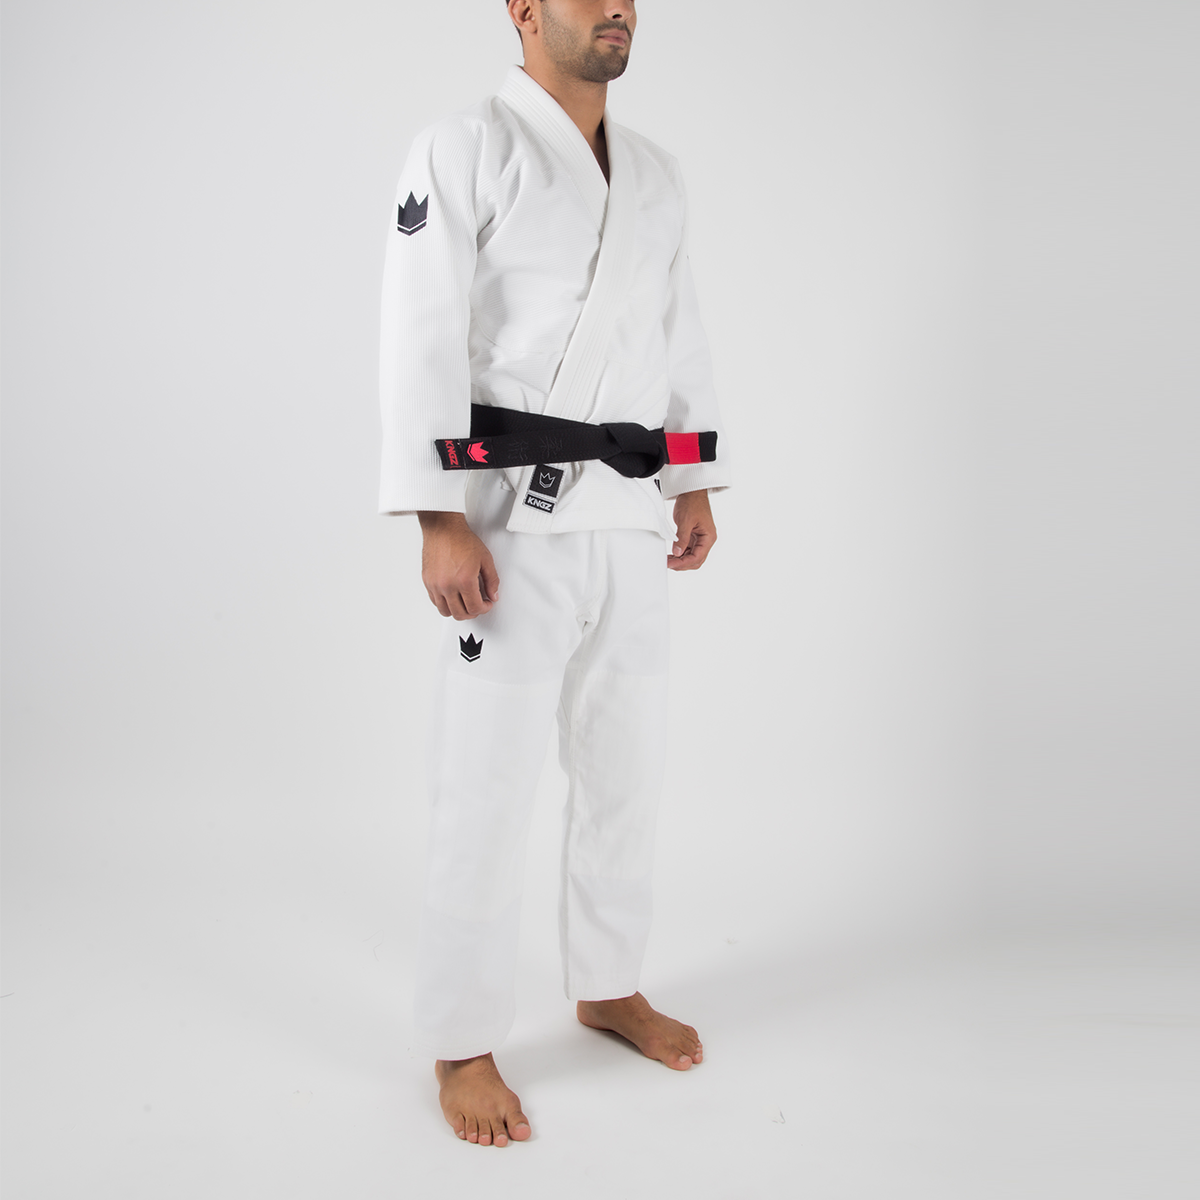 Kingz The ONE Jiu Jitsu Gi - FREE White Belt, Fighters Market